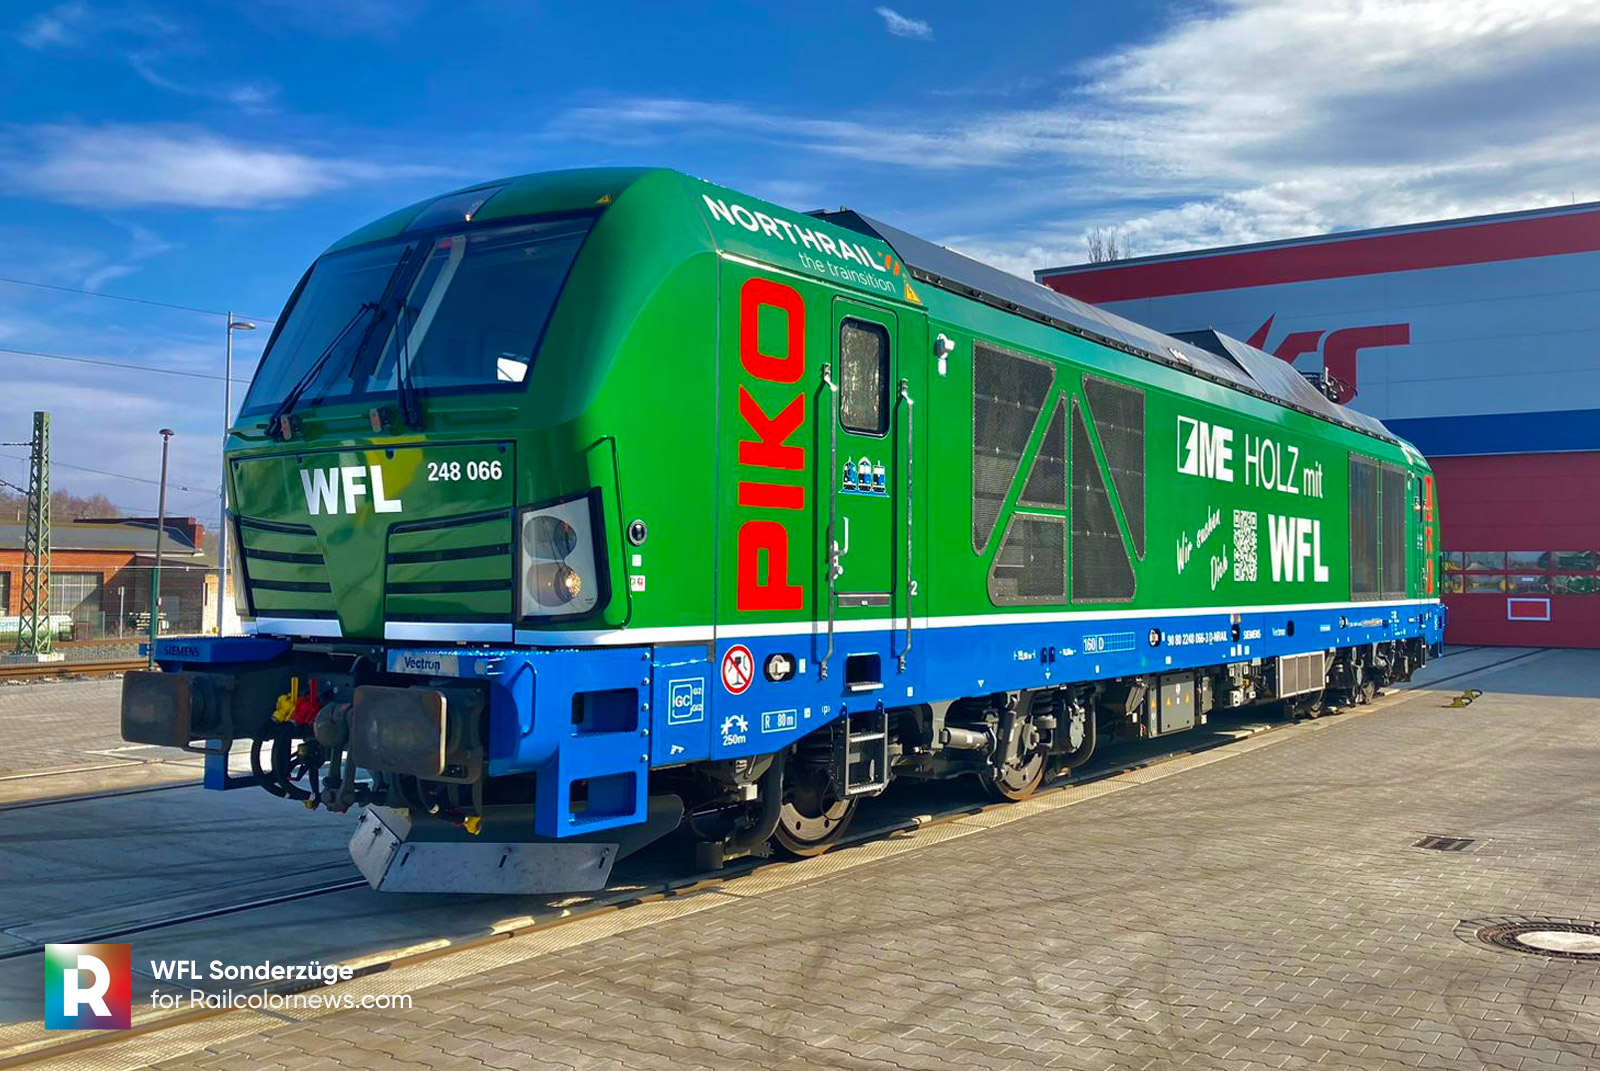 design] Northrail 248 066 in green for Wedler Franz Logistics 